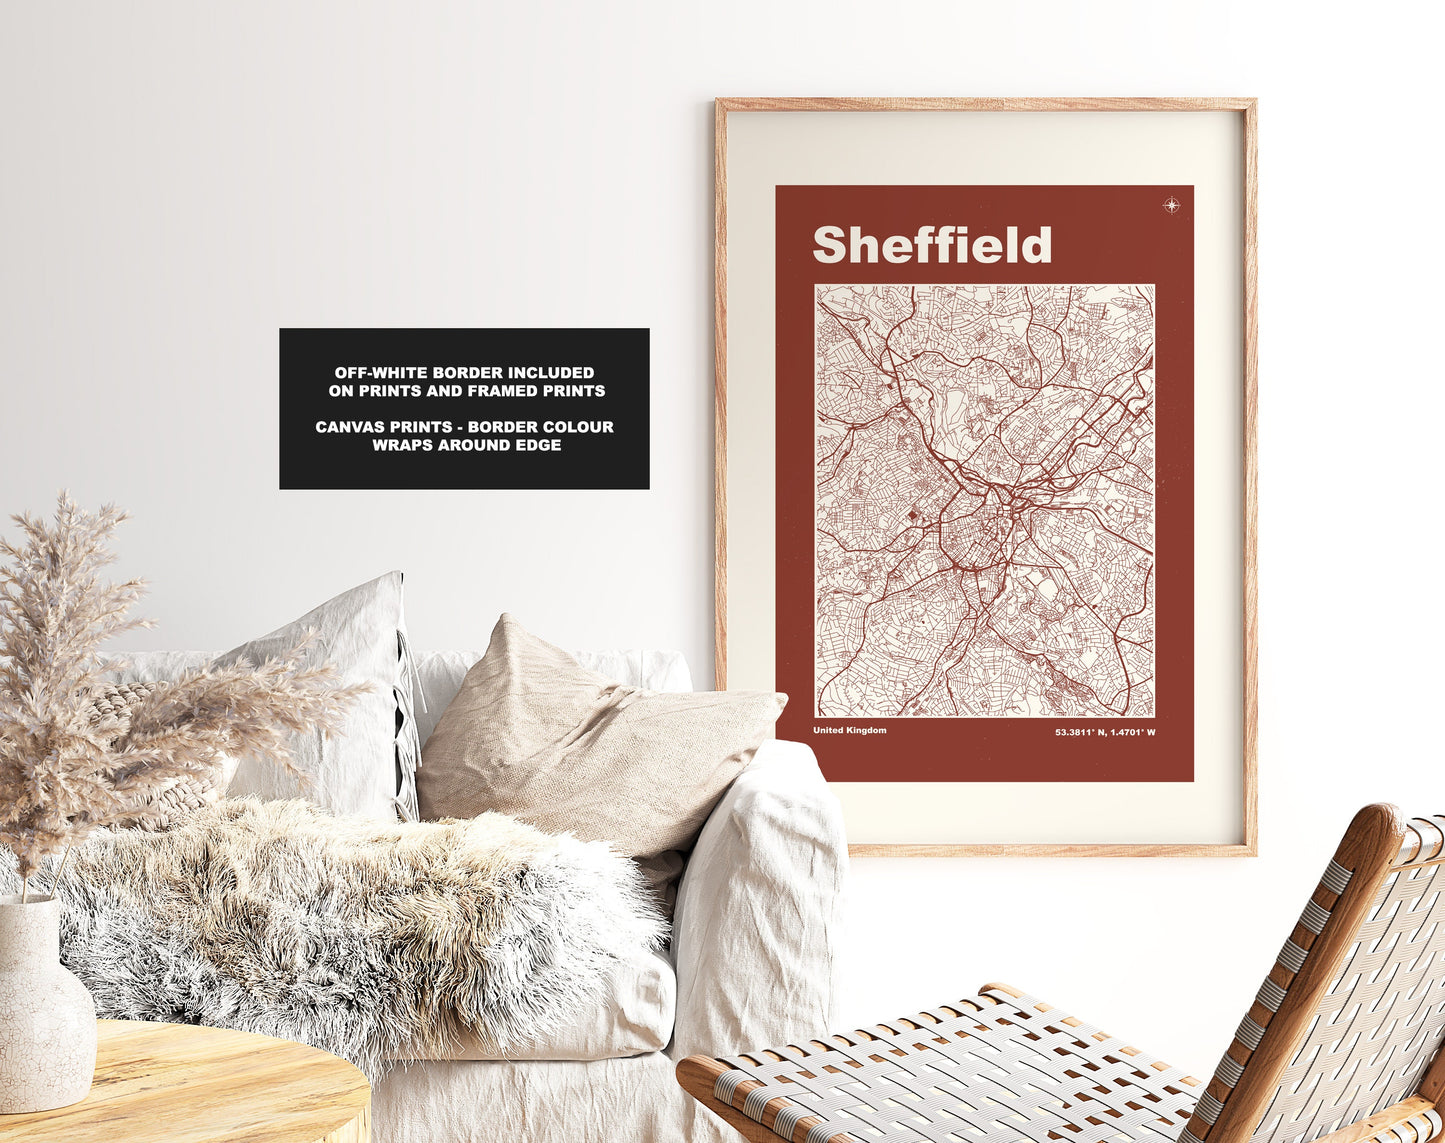 Sheffield Print - Map Print - Mid Century Modern  - Retro - Vintage - Contemporary - Sheffield Print - City Map - City Map Poster - Gift